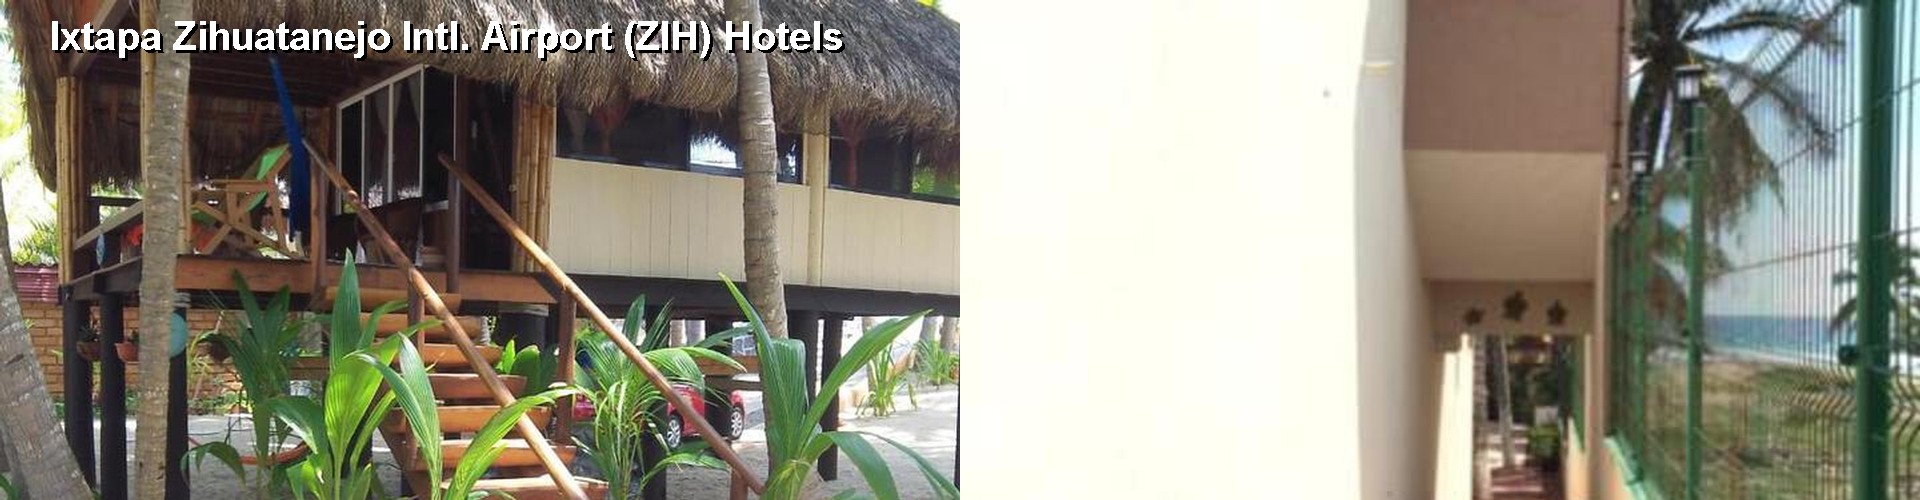 5 Best Hotels near Ixtapa Zihuatanejo Intl. Airport (ZIH)